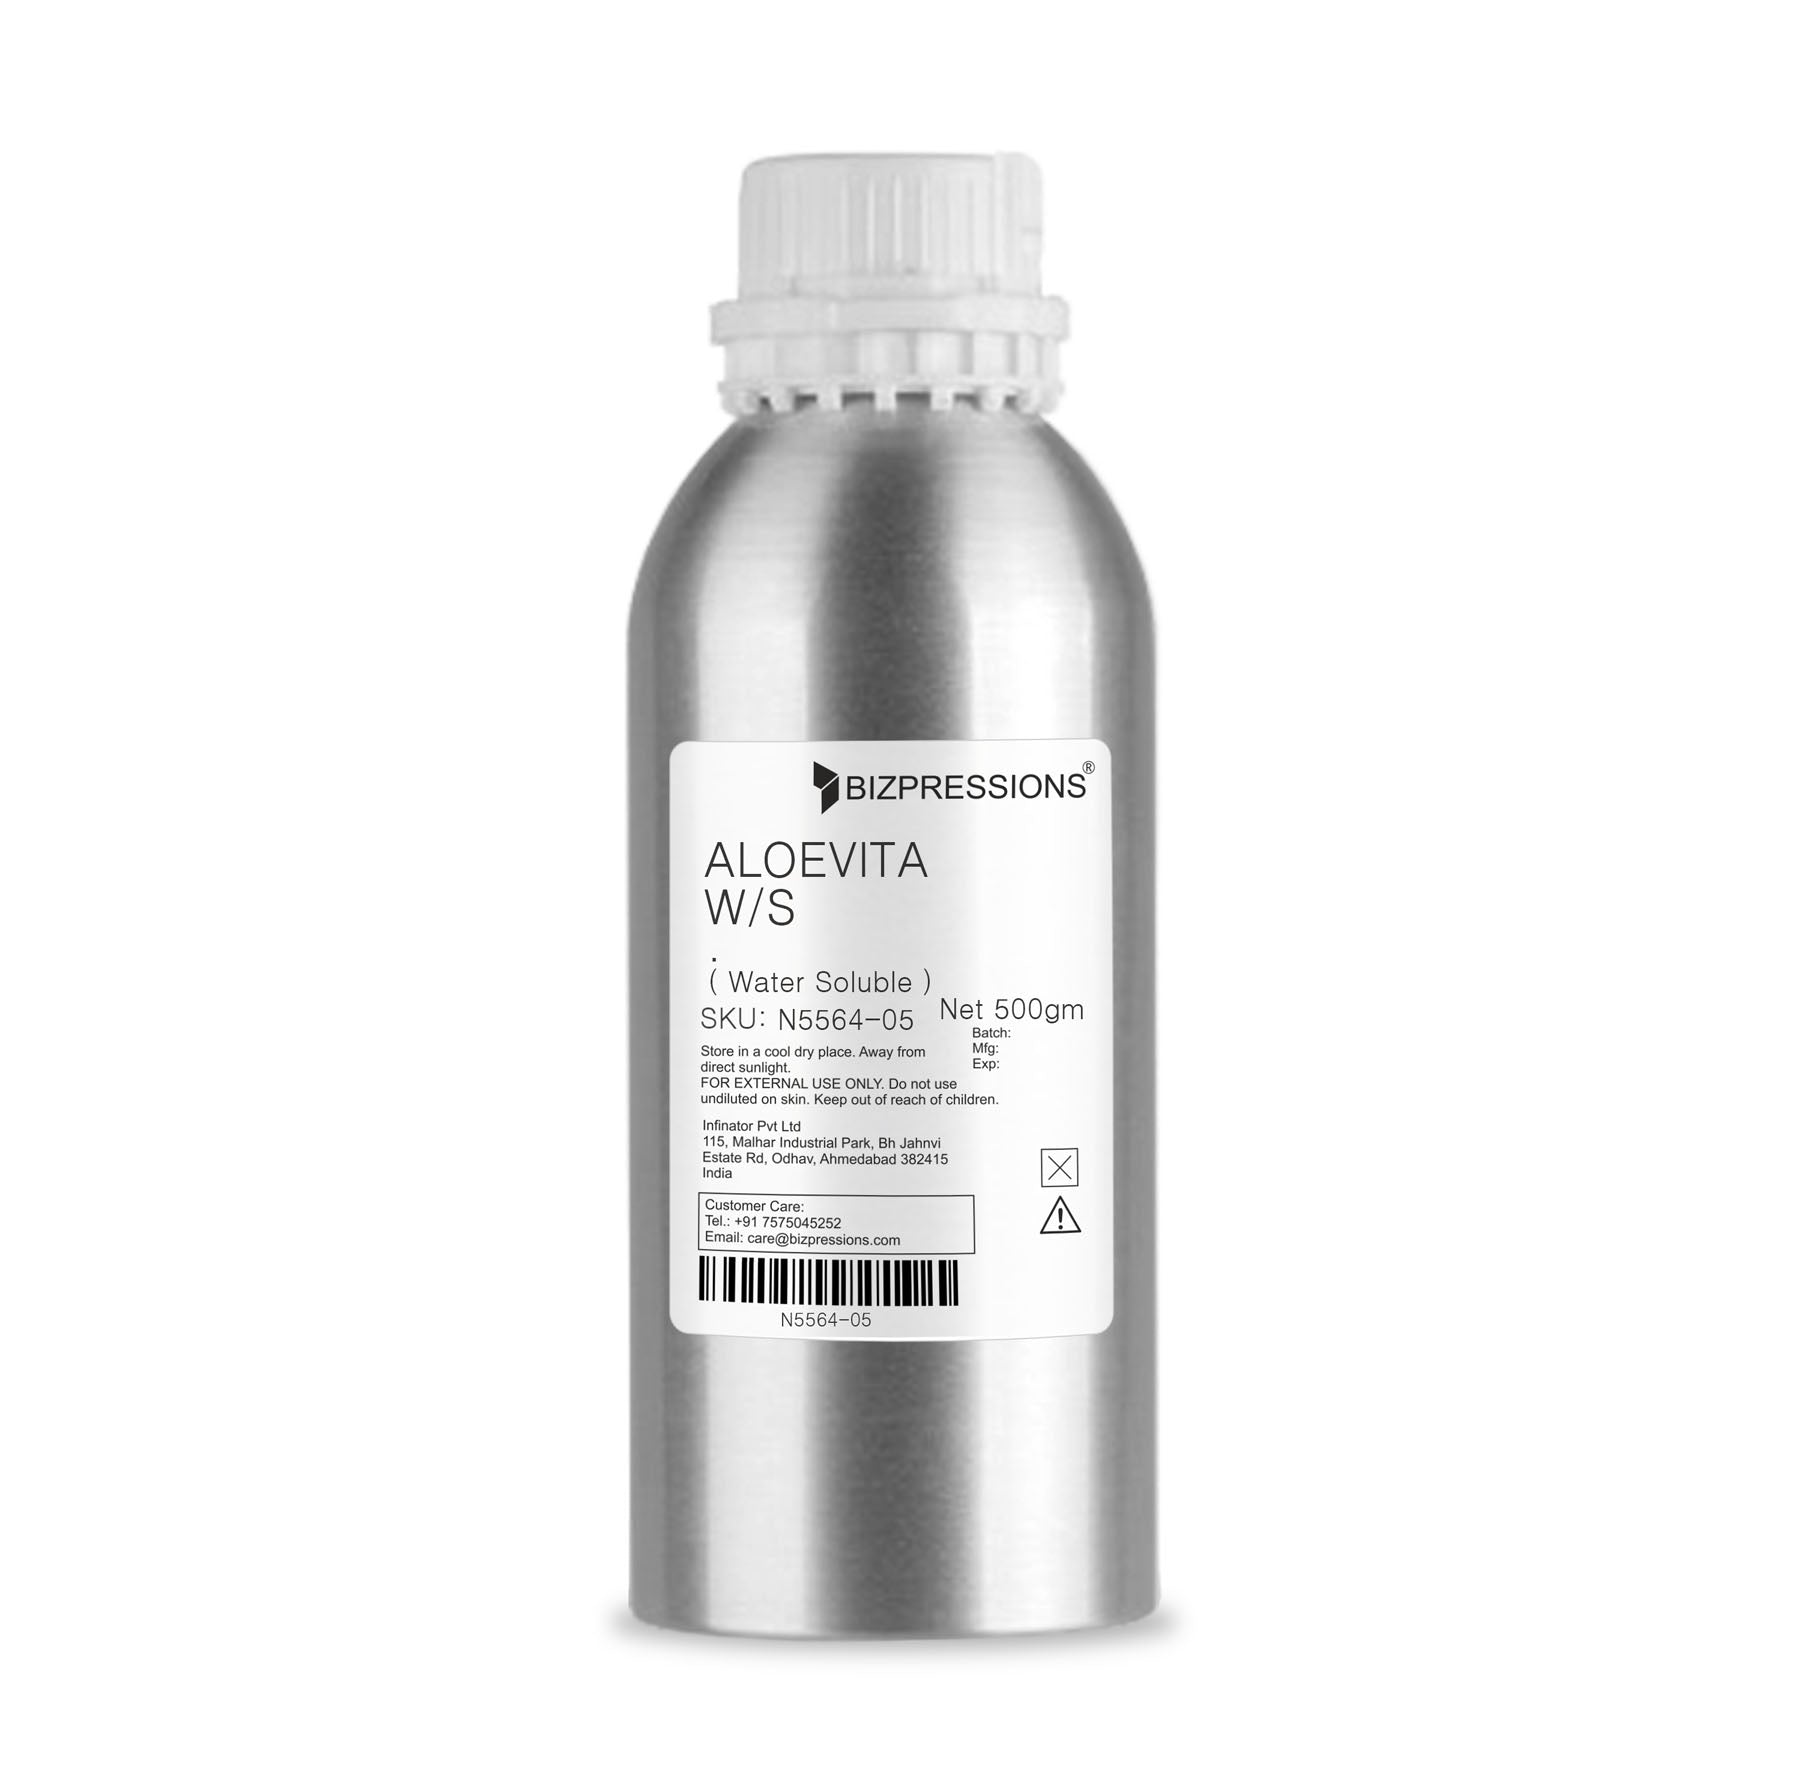 ALOEVITA W/S - Fragrance ( Water Soluble ) - 500 gm